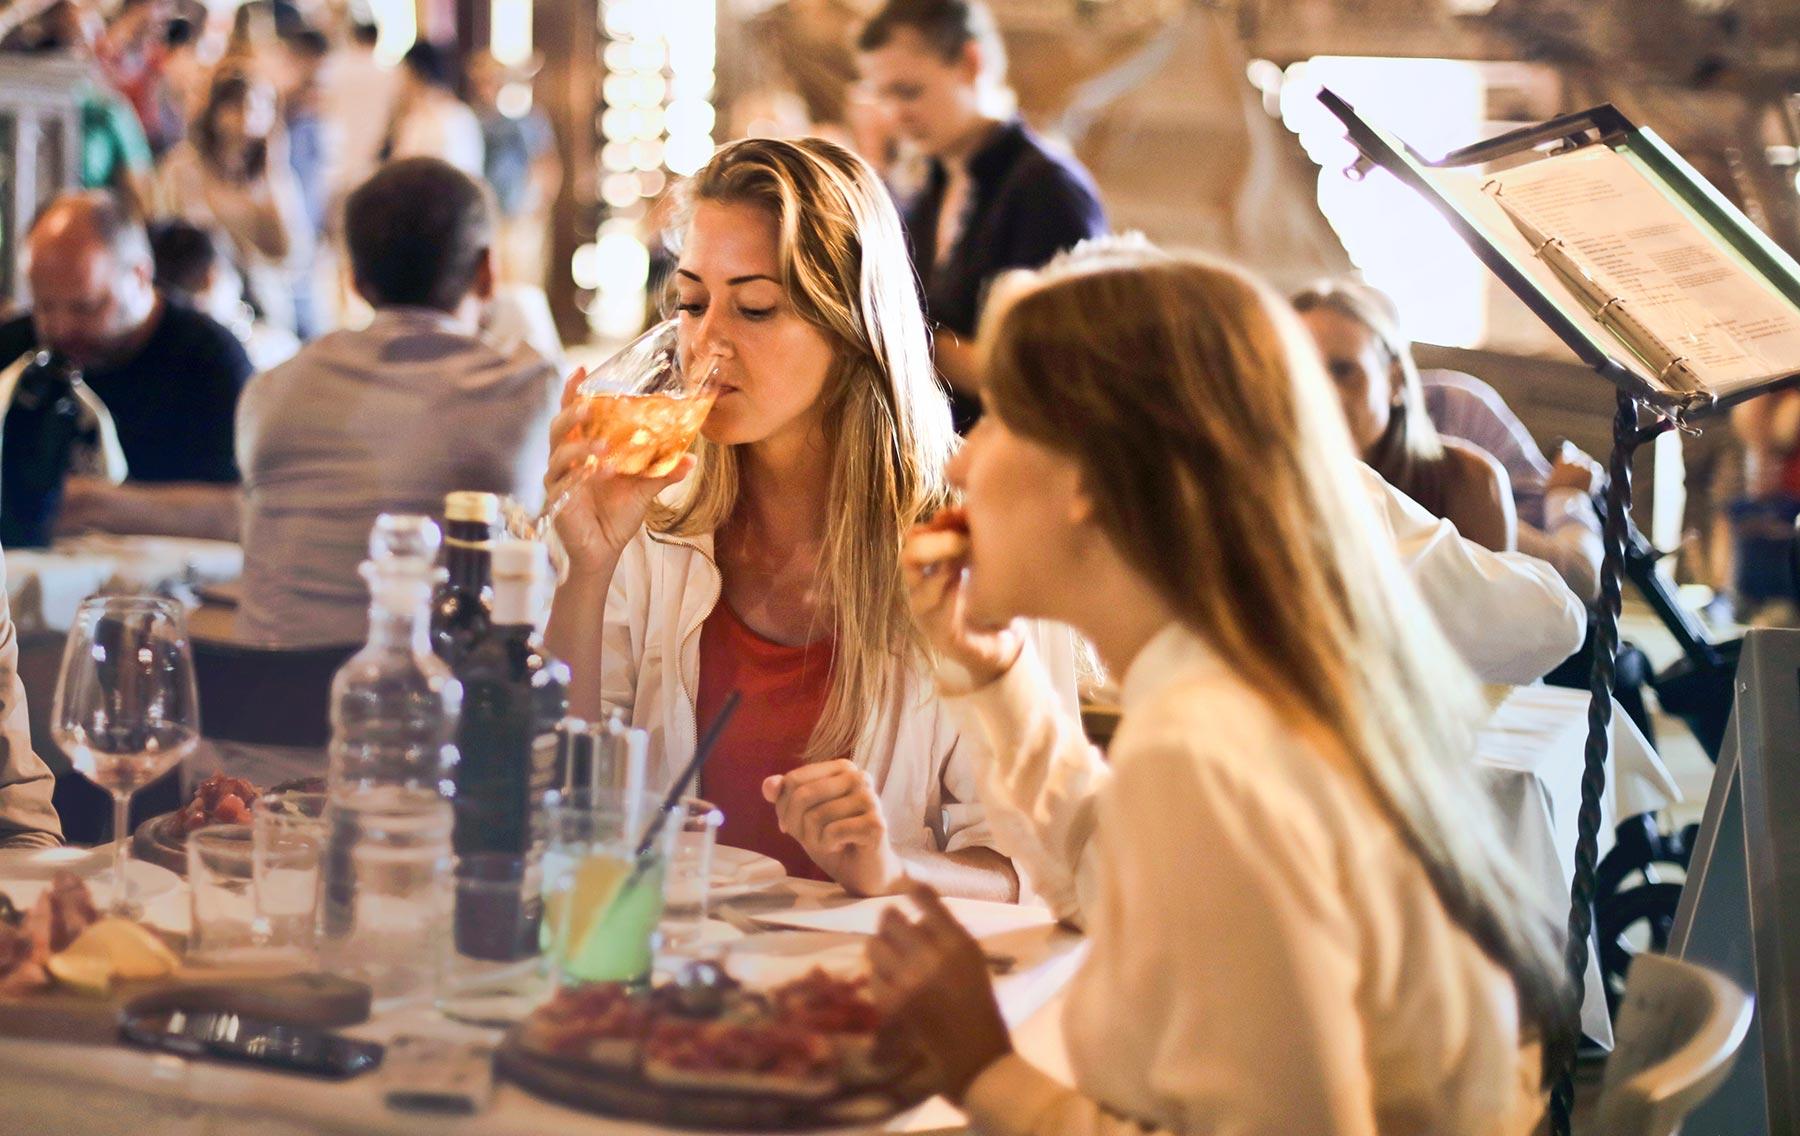 Women enjoying food at a restaurant